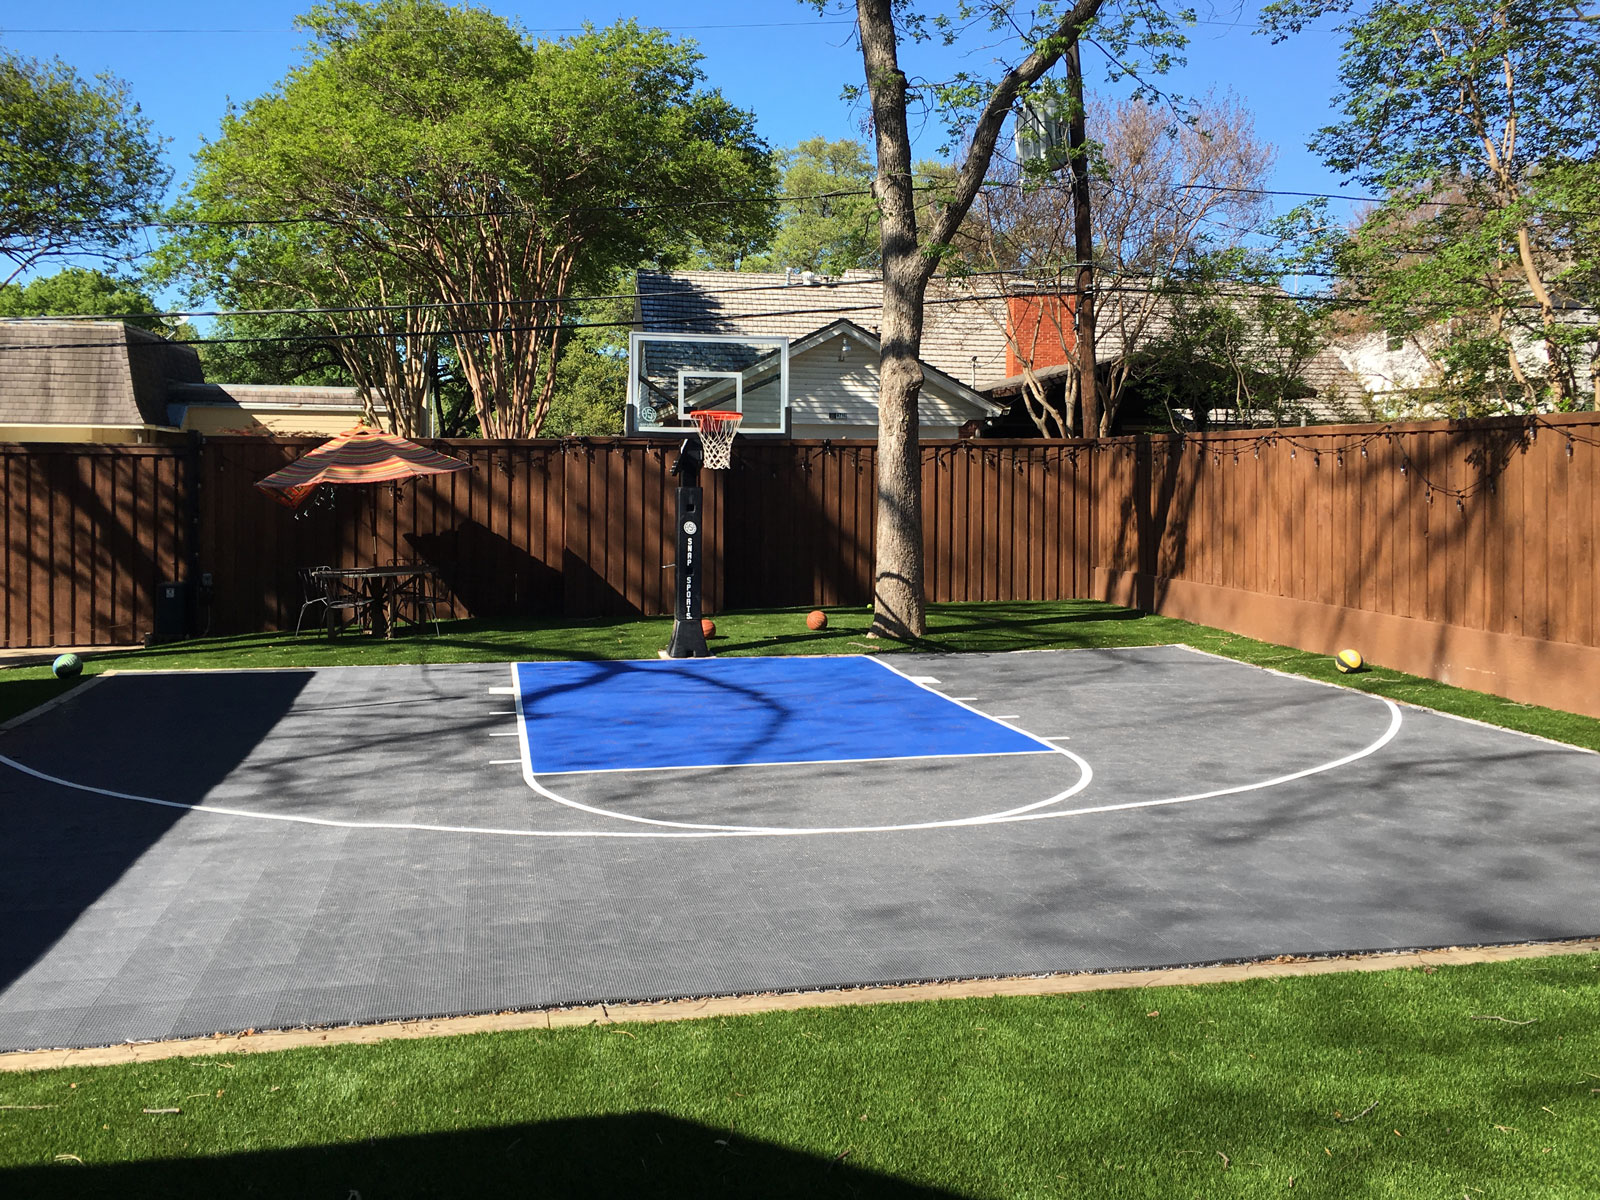 Backyard Basketball Court Dimensions / Backyard Basketball Court